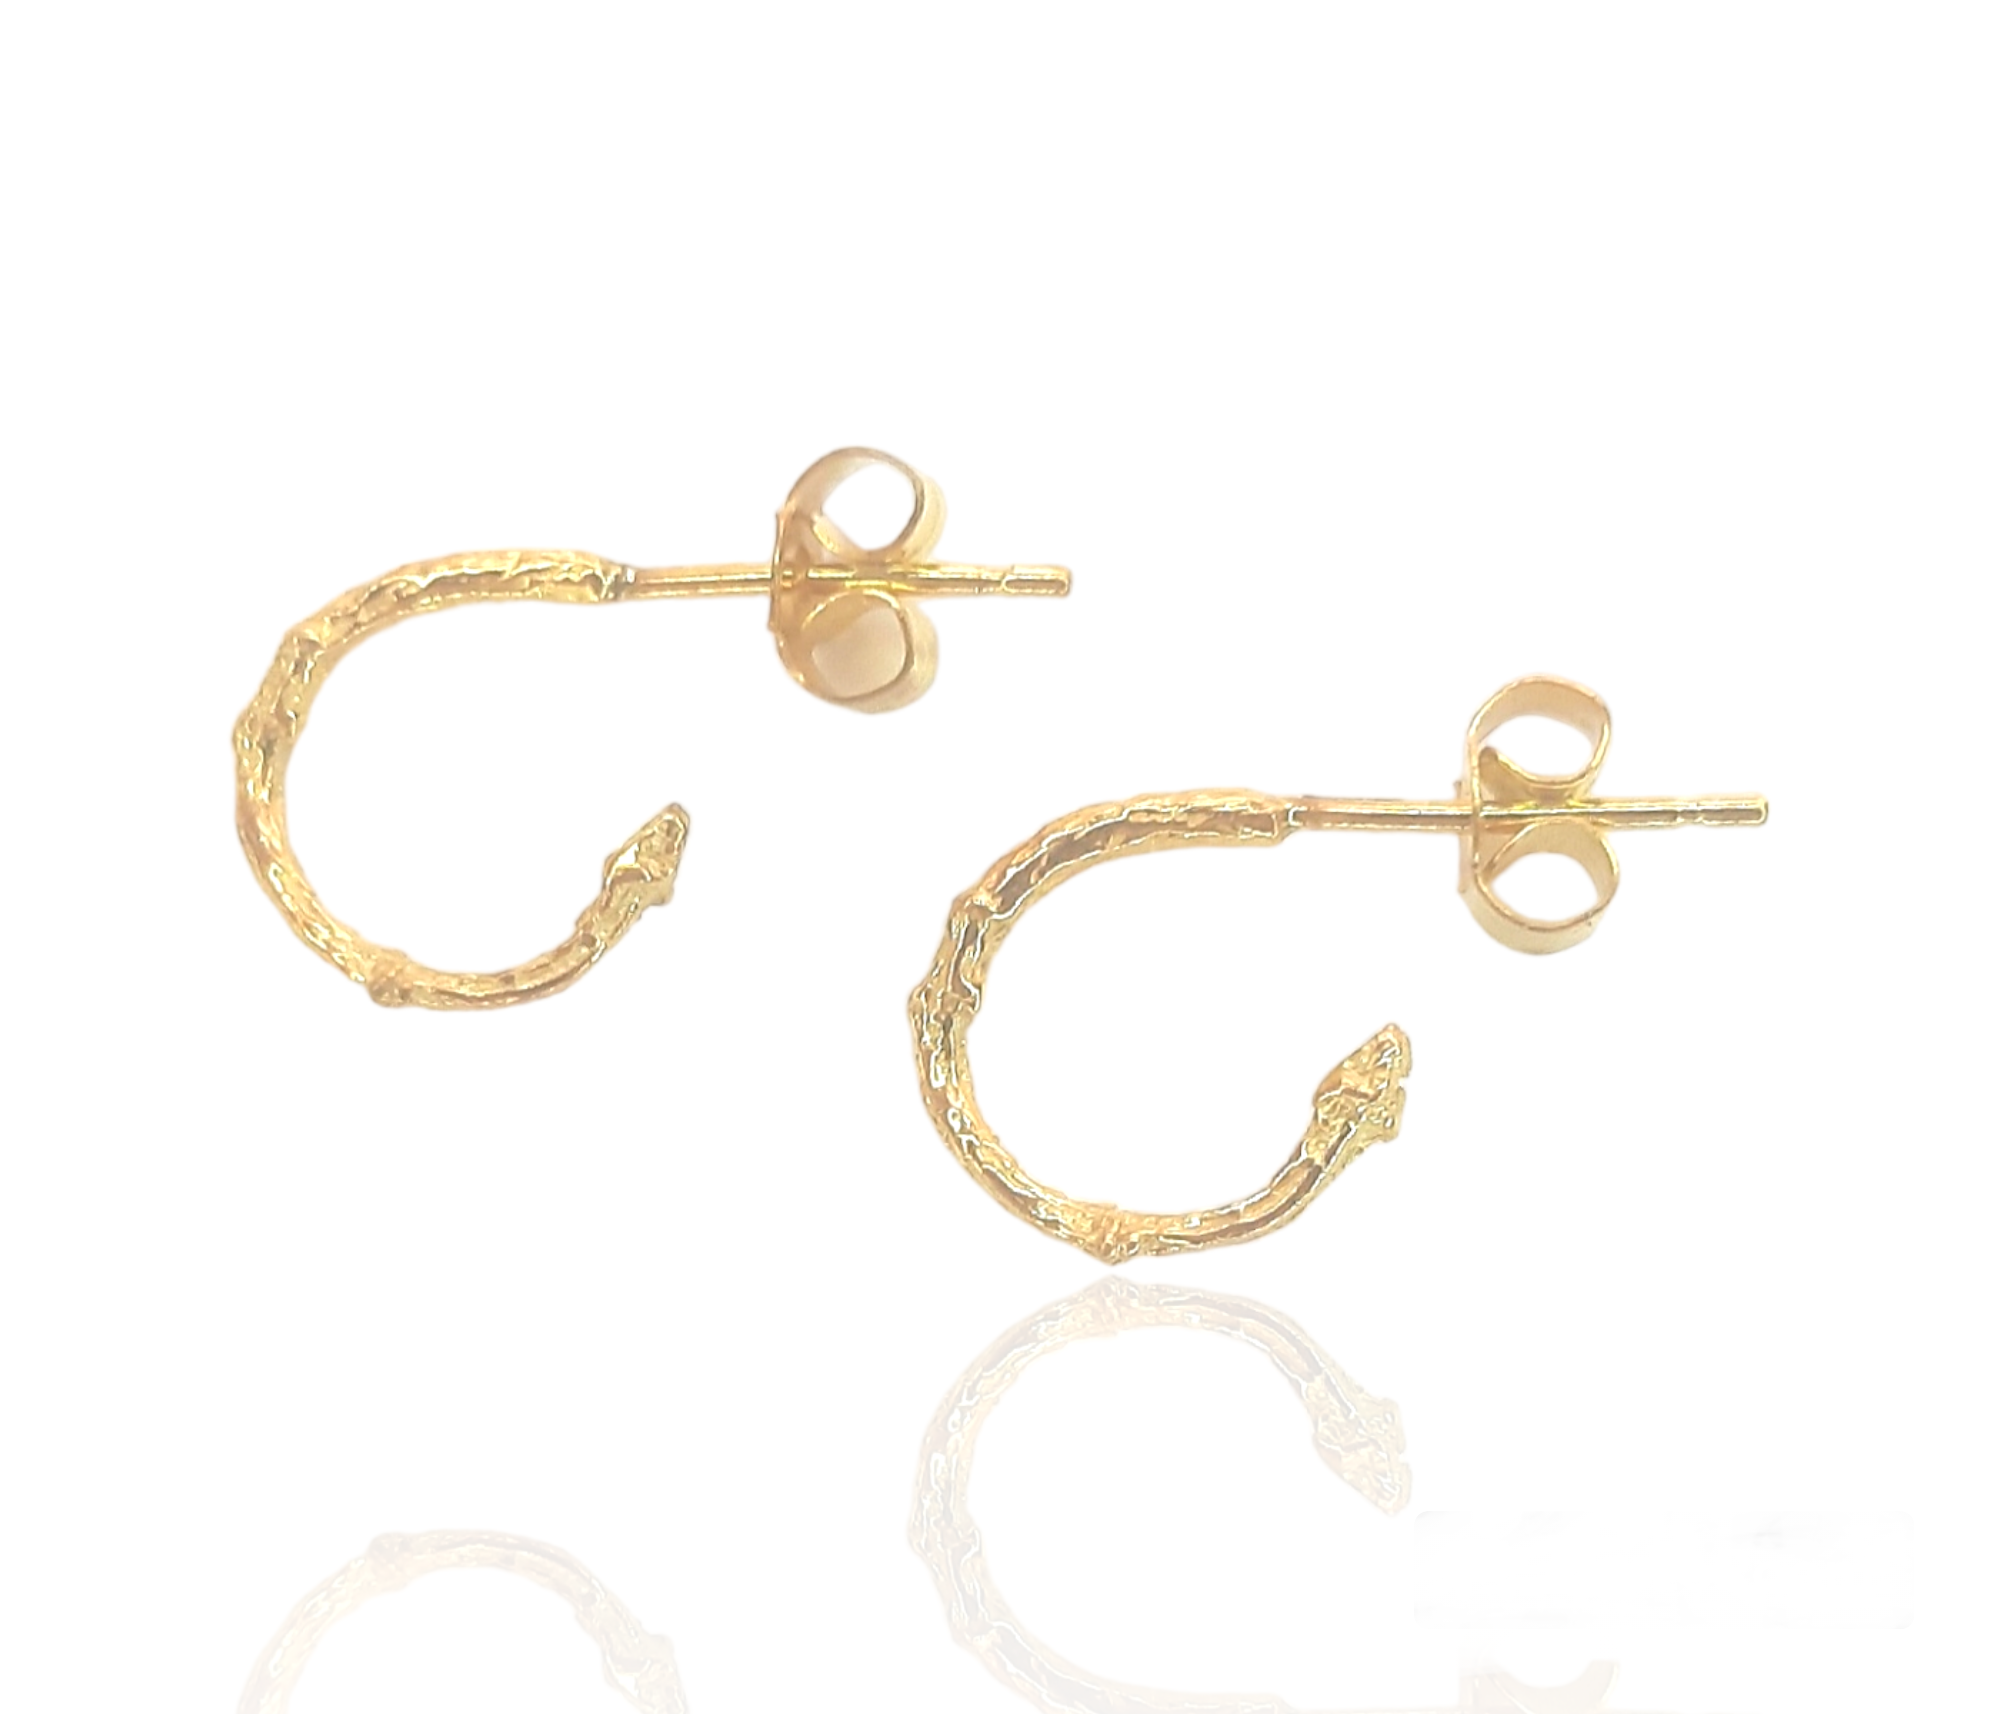 Tiny Twig Hoops - 9k gold earrings